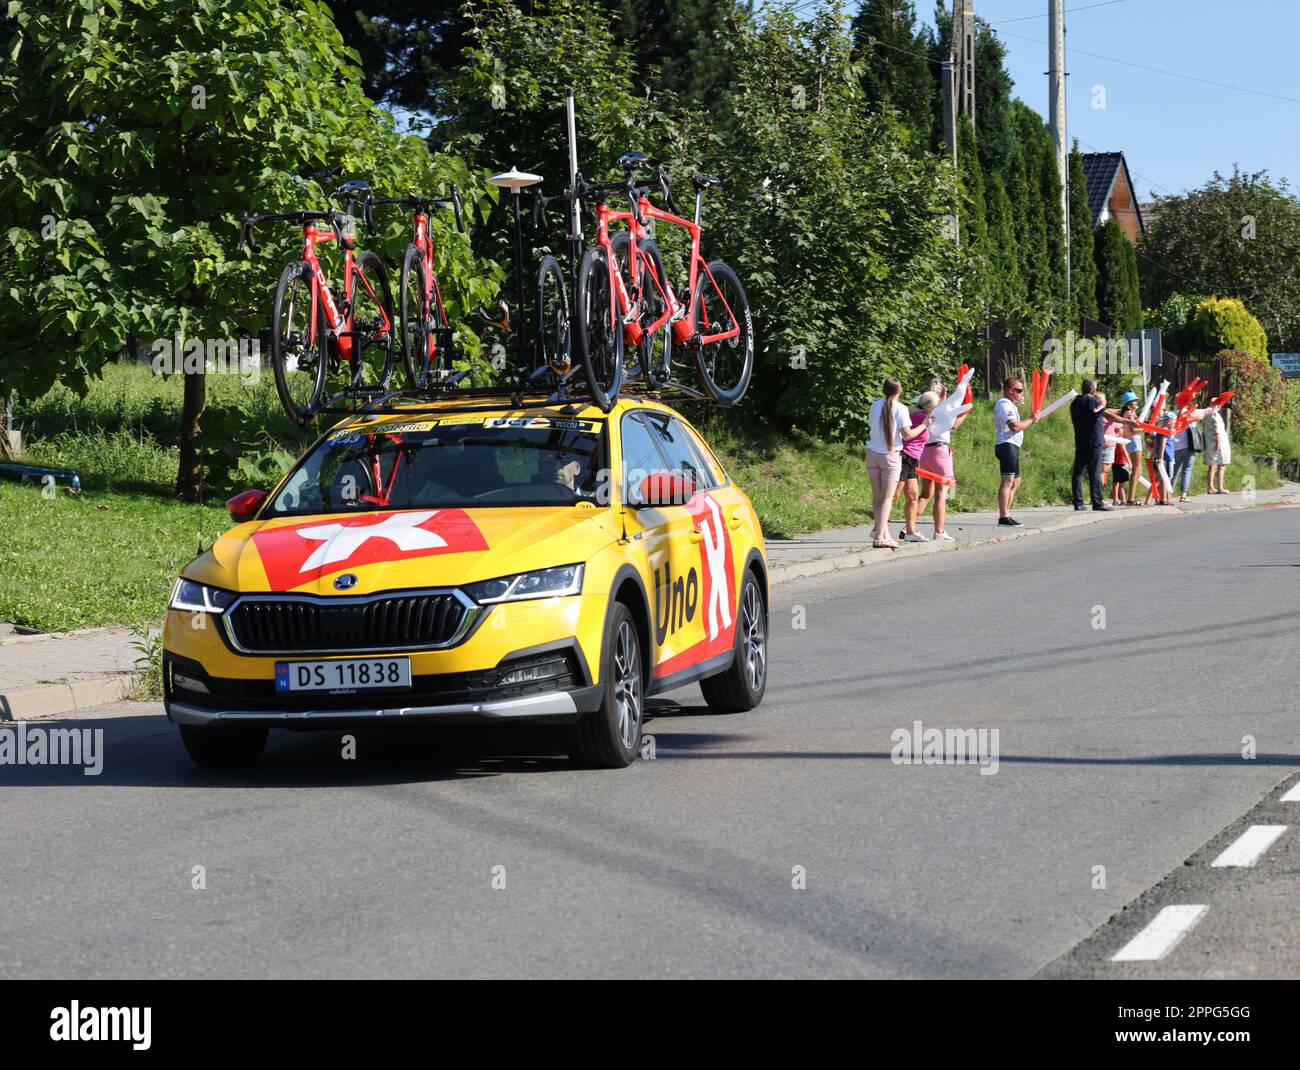 Uno X Pro CyclingTeam vehicle on the route of Tour de Pologne UCI â€“ World Tour, stage 7 Skawina - Krakow. Stock Photo